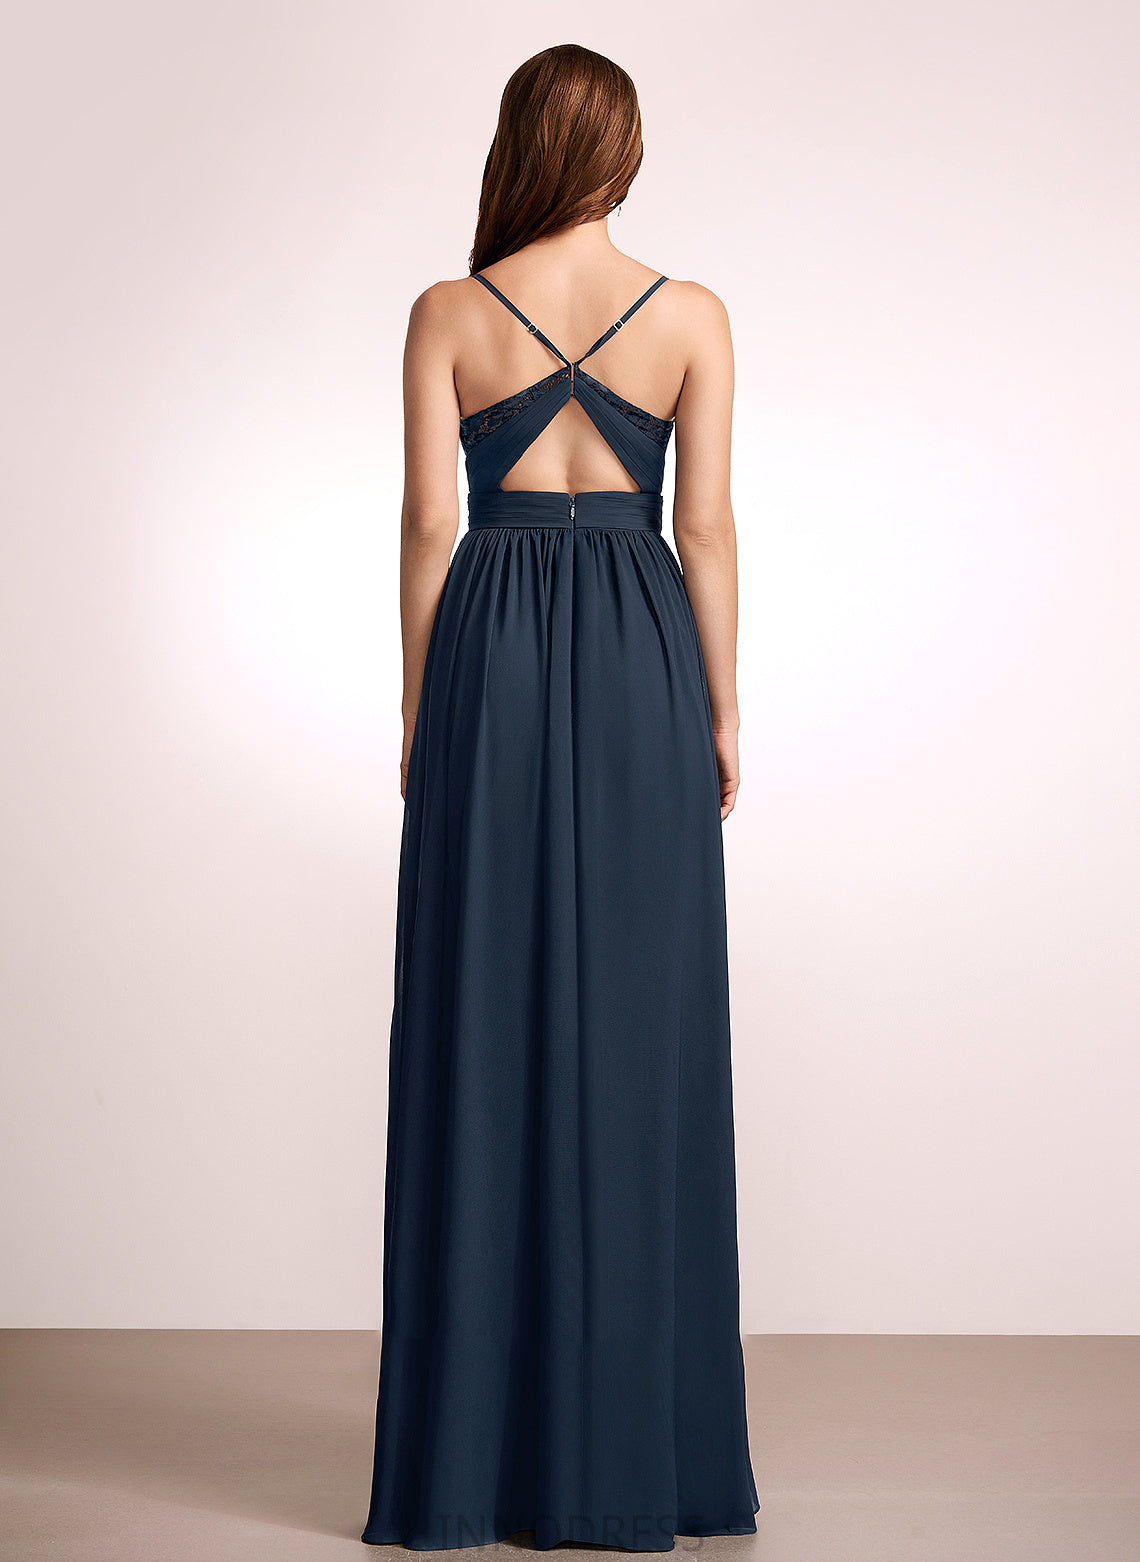 Neckline Floor-Length V-neck Lace Fabric Length A-Line Embellishment Silhouette Lisa